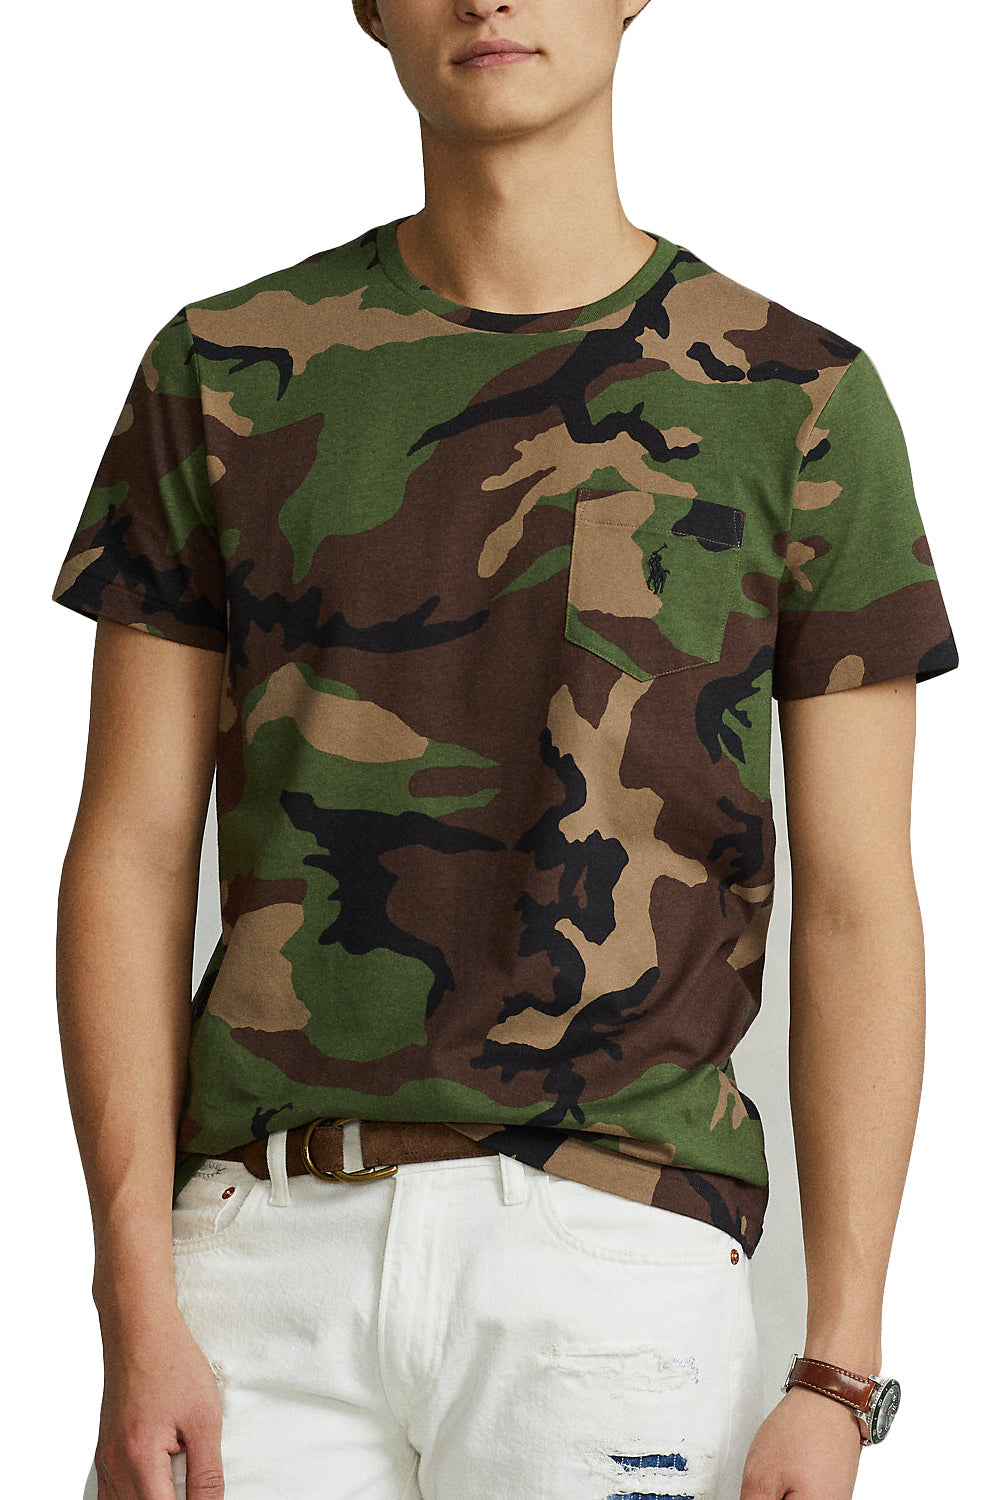 Tshirt stampa camouflage - POLO RALPH LAUREN T-shirt POLO RALPH LAUREN   